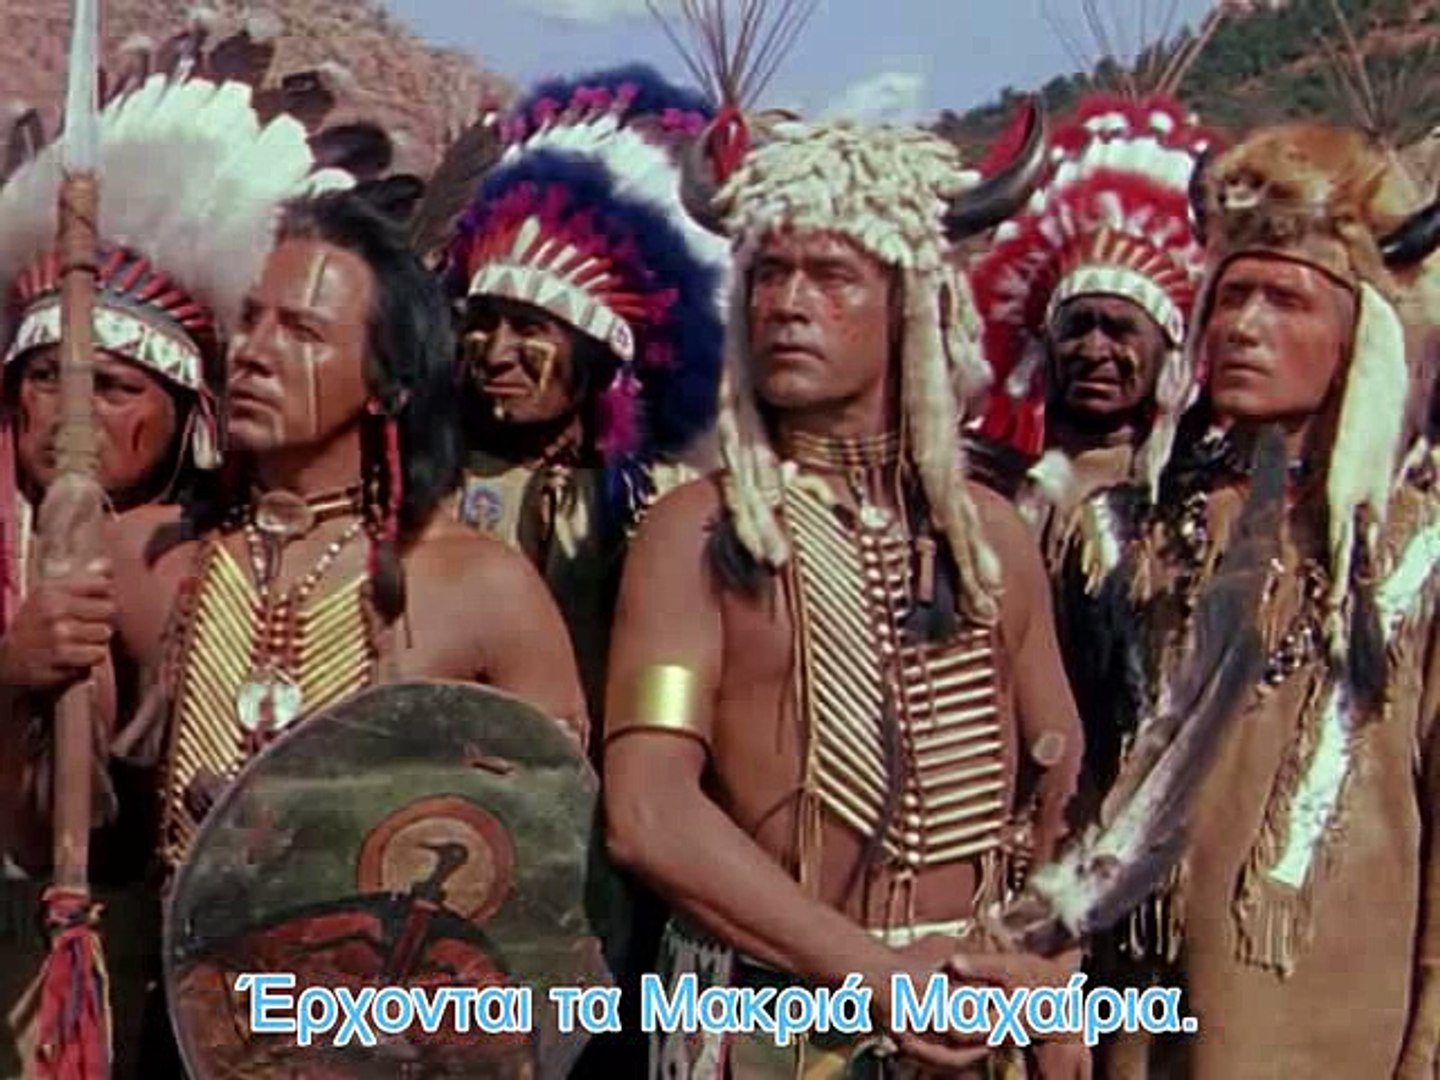 Pony Soldier 1952 Μερος 1ο Ελληνικοι υποτιτλοι - video Dailymotion